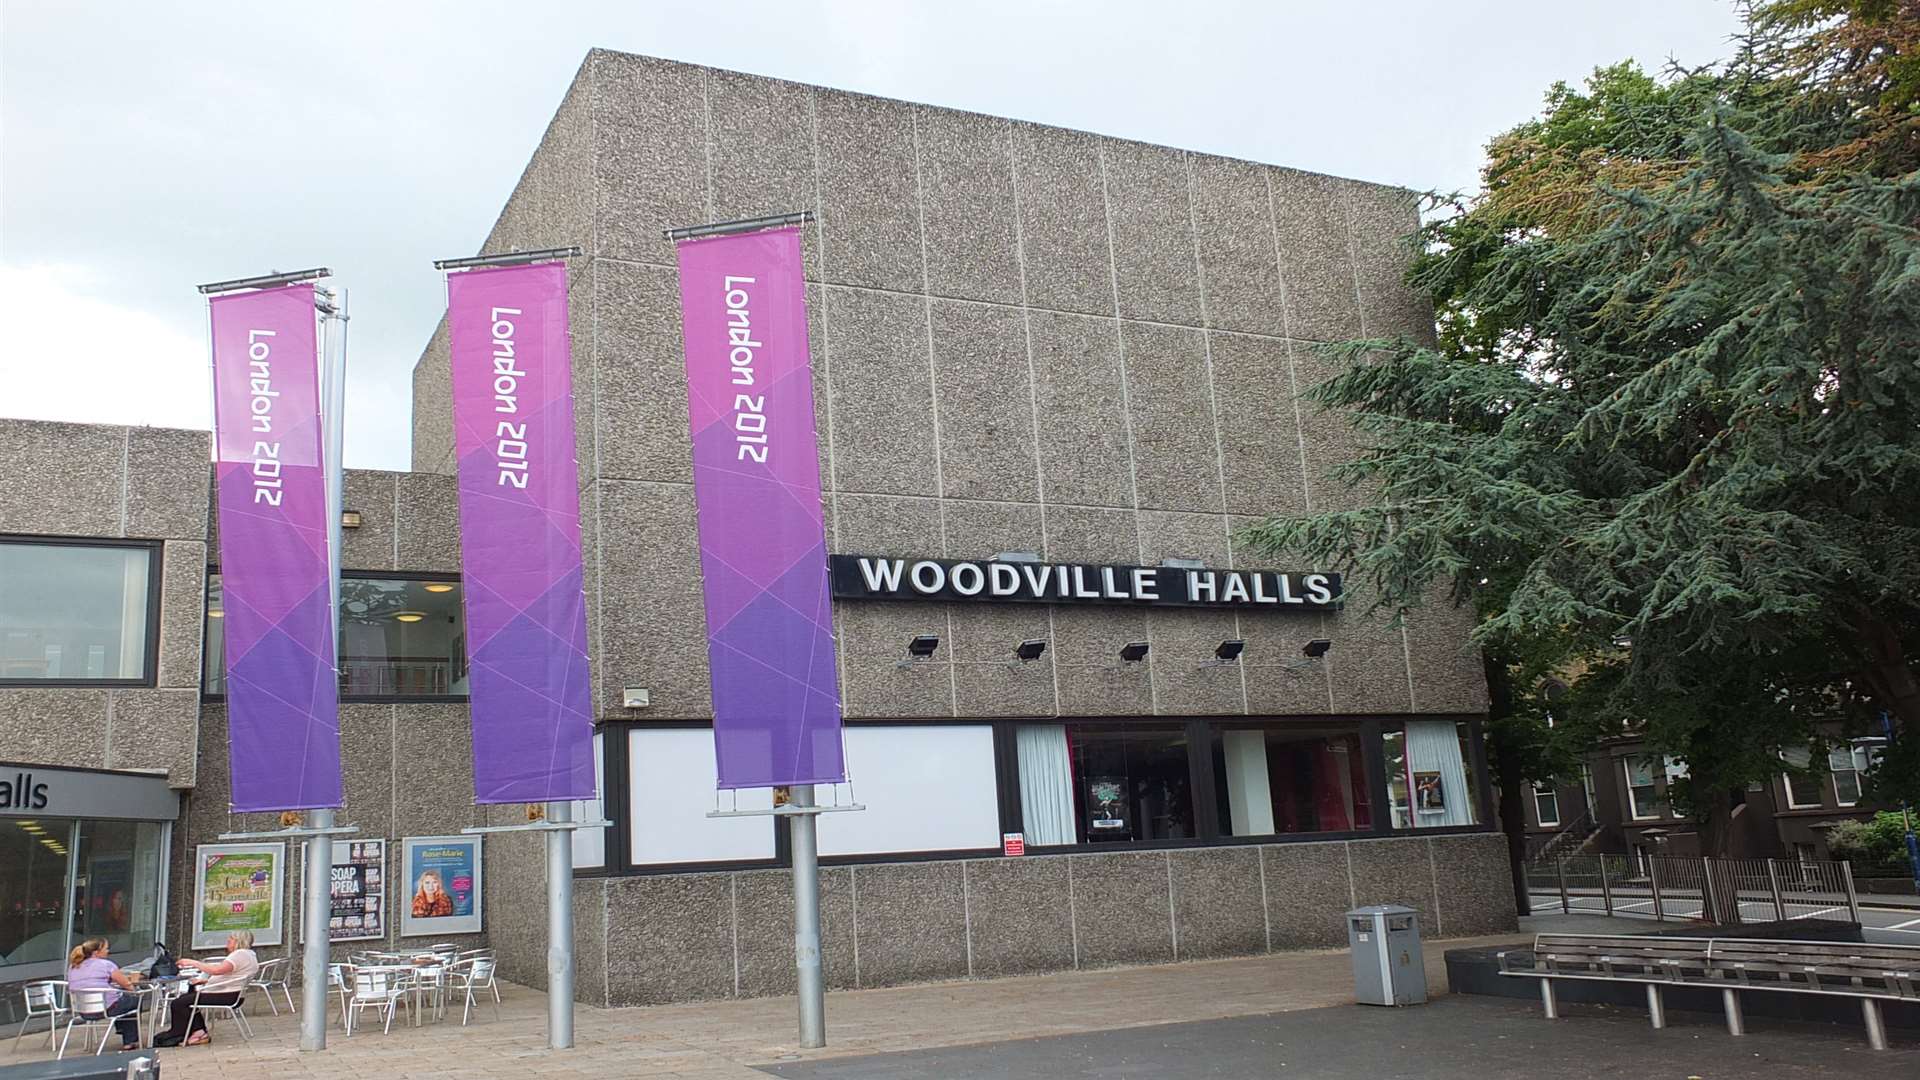 The Woodville Halls